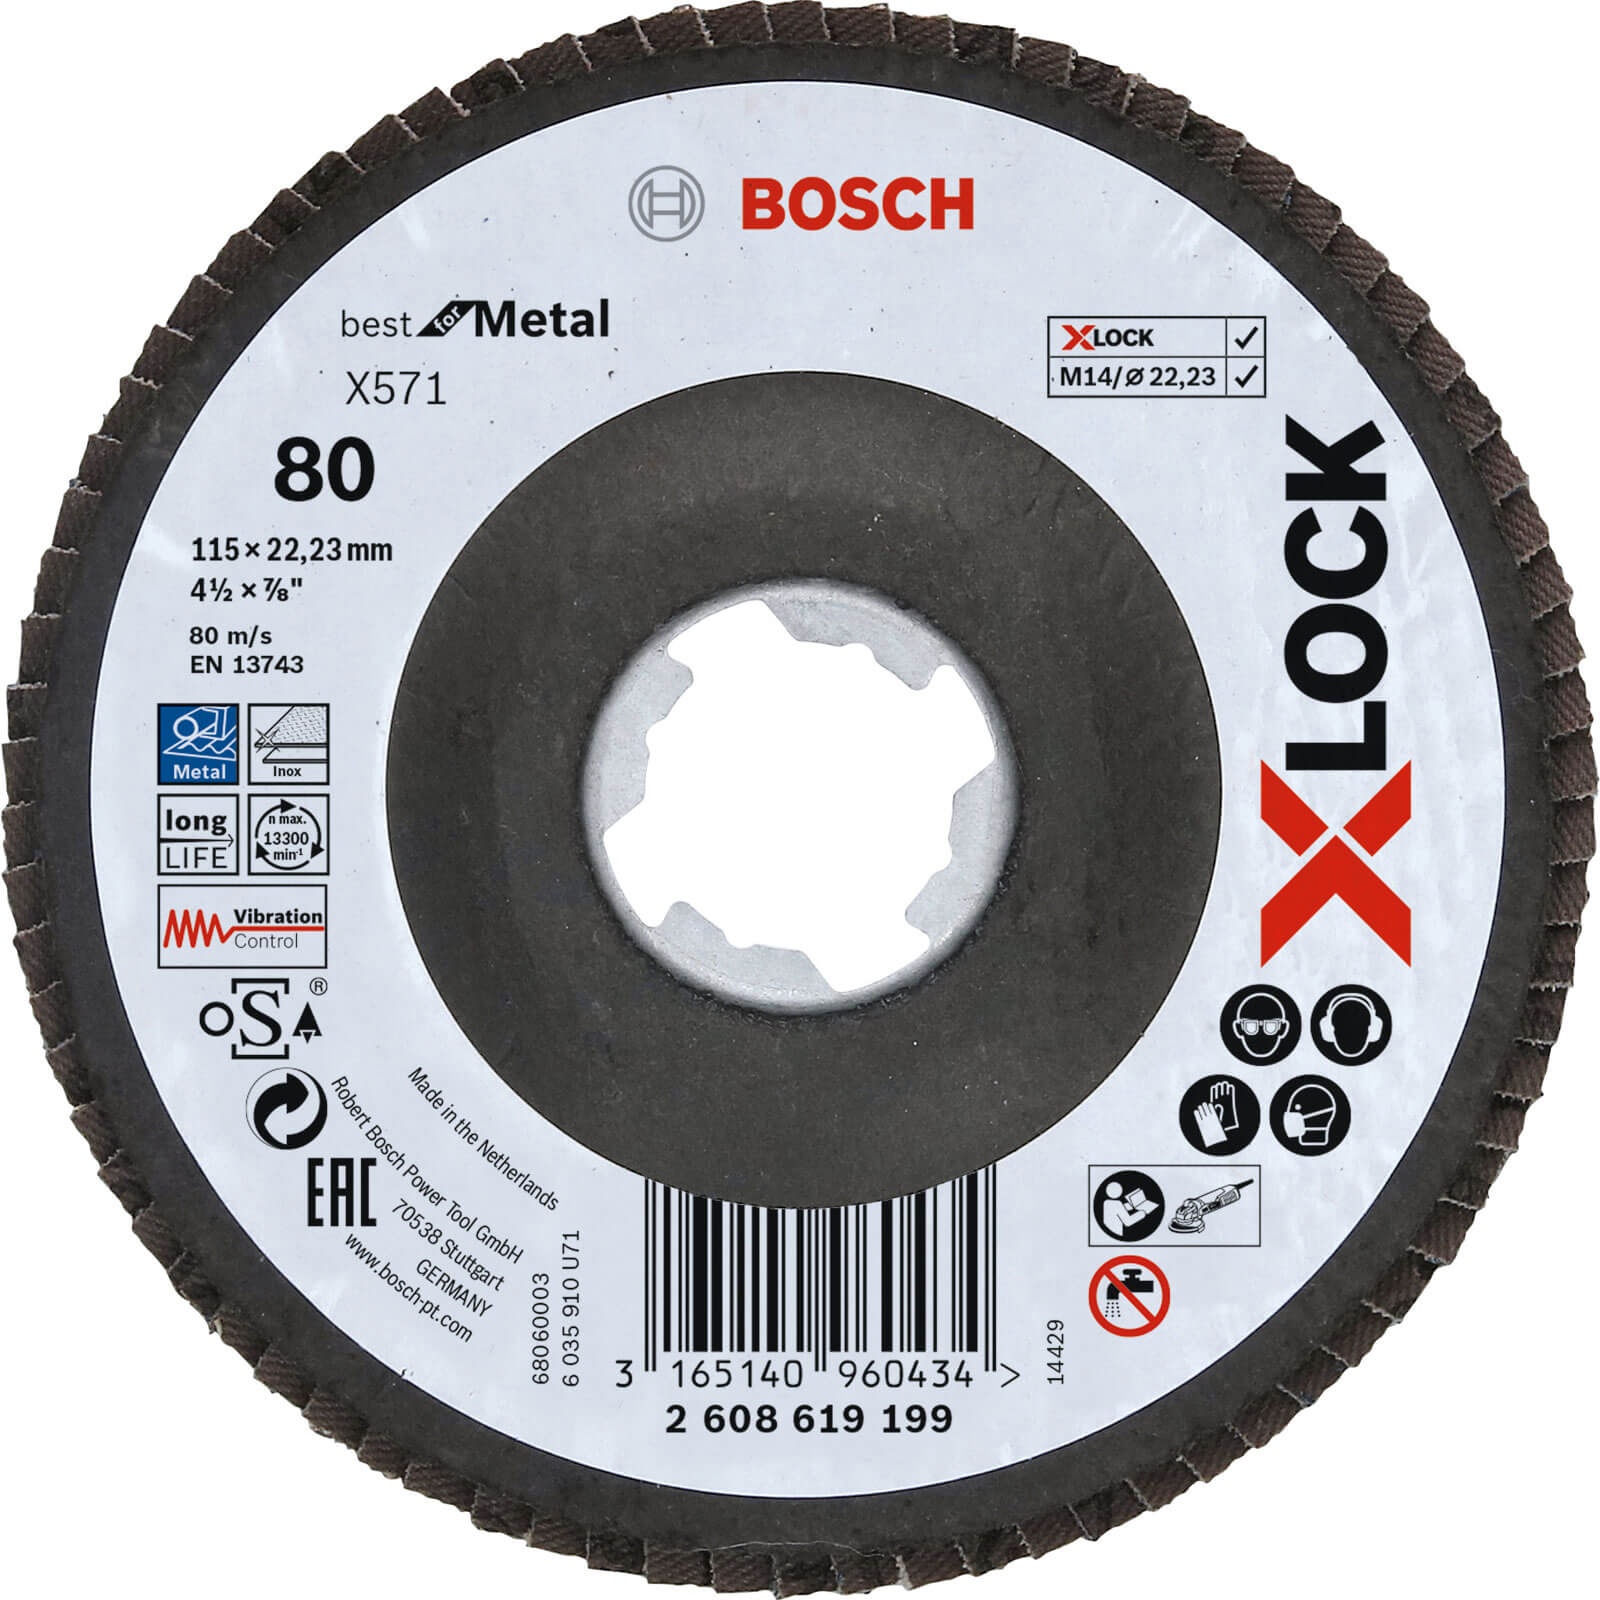 Photo of Bosch X Lock Zirconium Abrasive Flap Disc 115mm 80g Pack Of 1